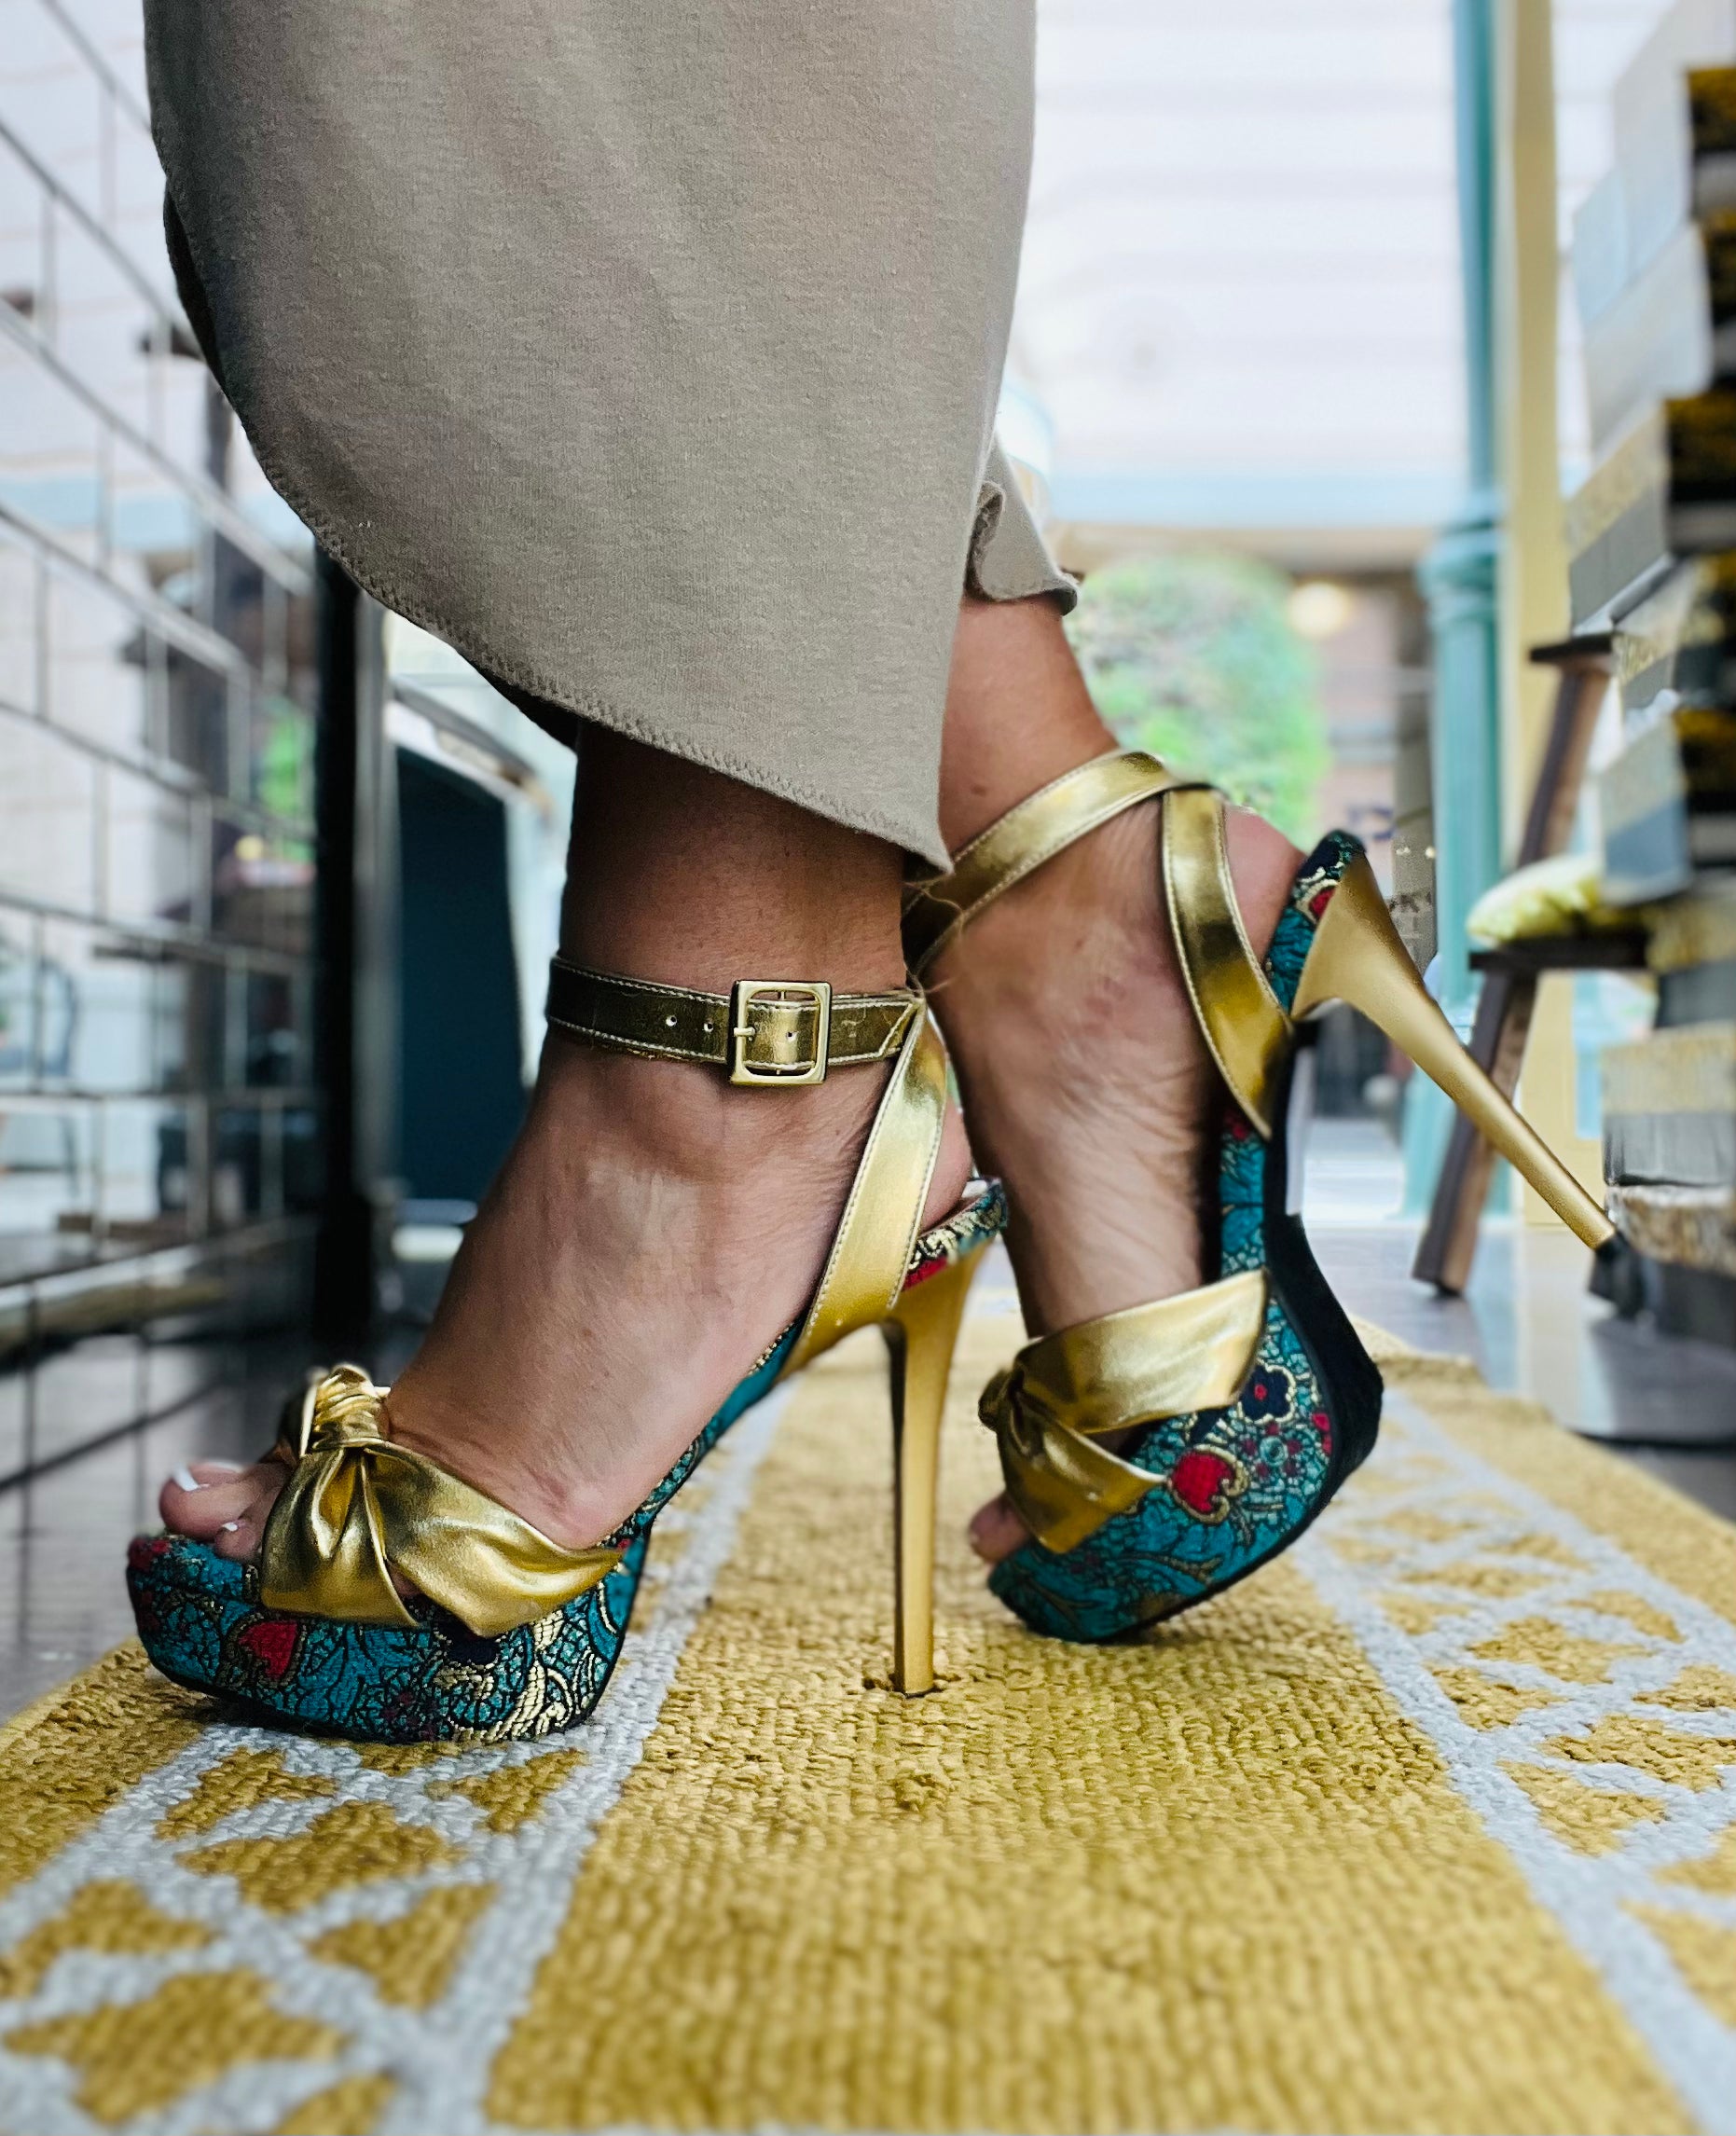 High heels platform turquoise and metallic gold, VRS.  